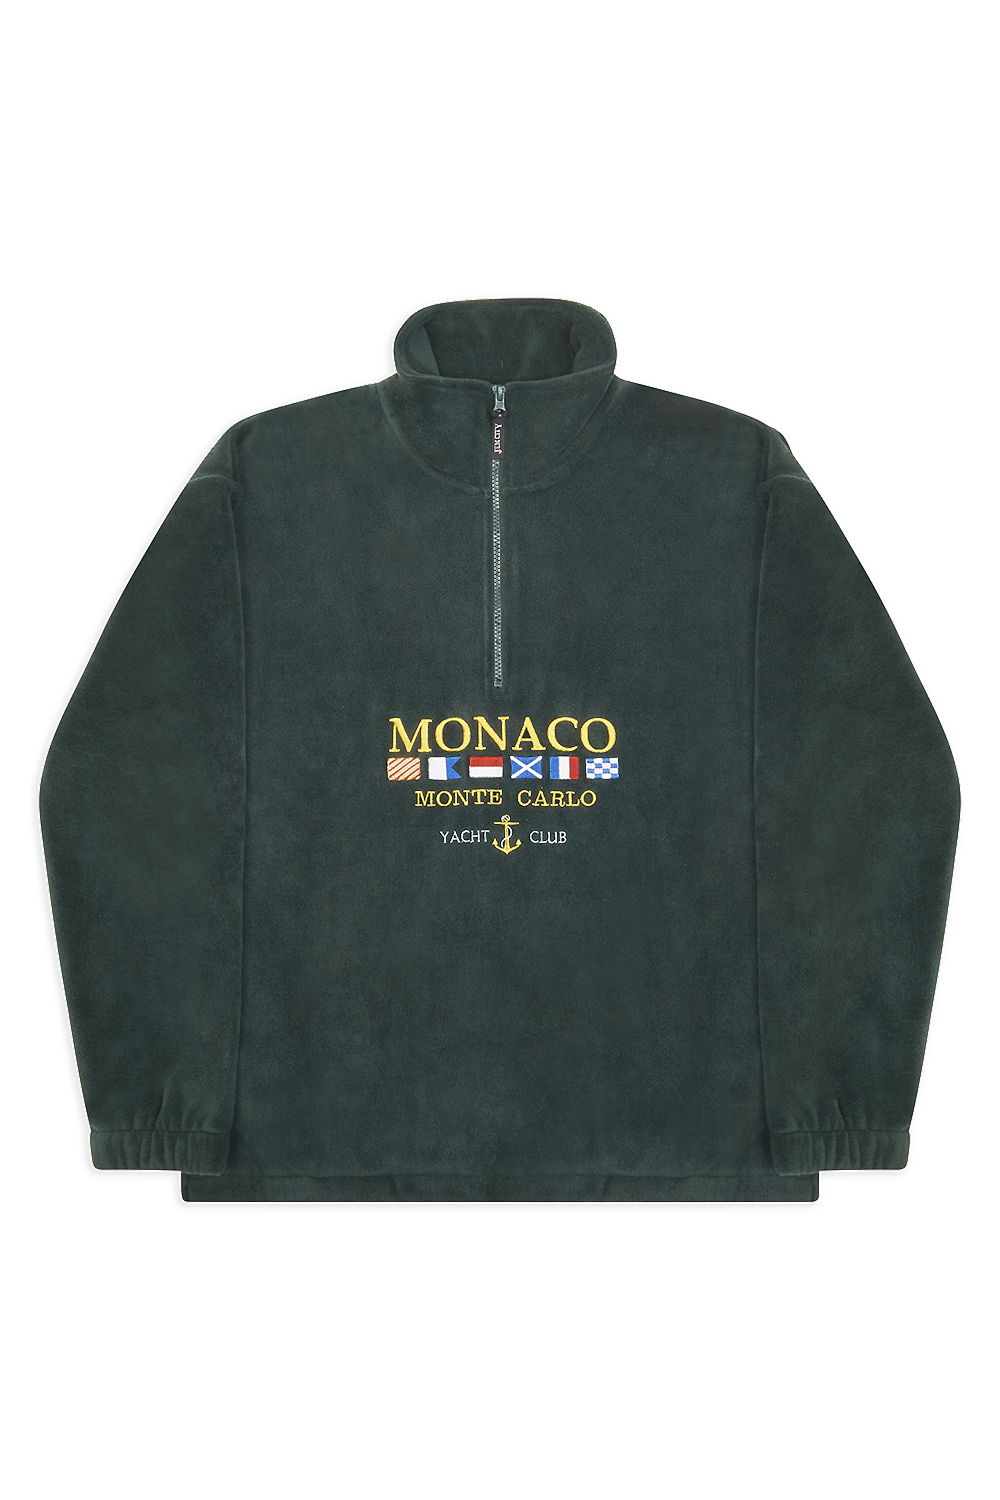 Monaco Vintage Fleece Green